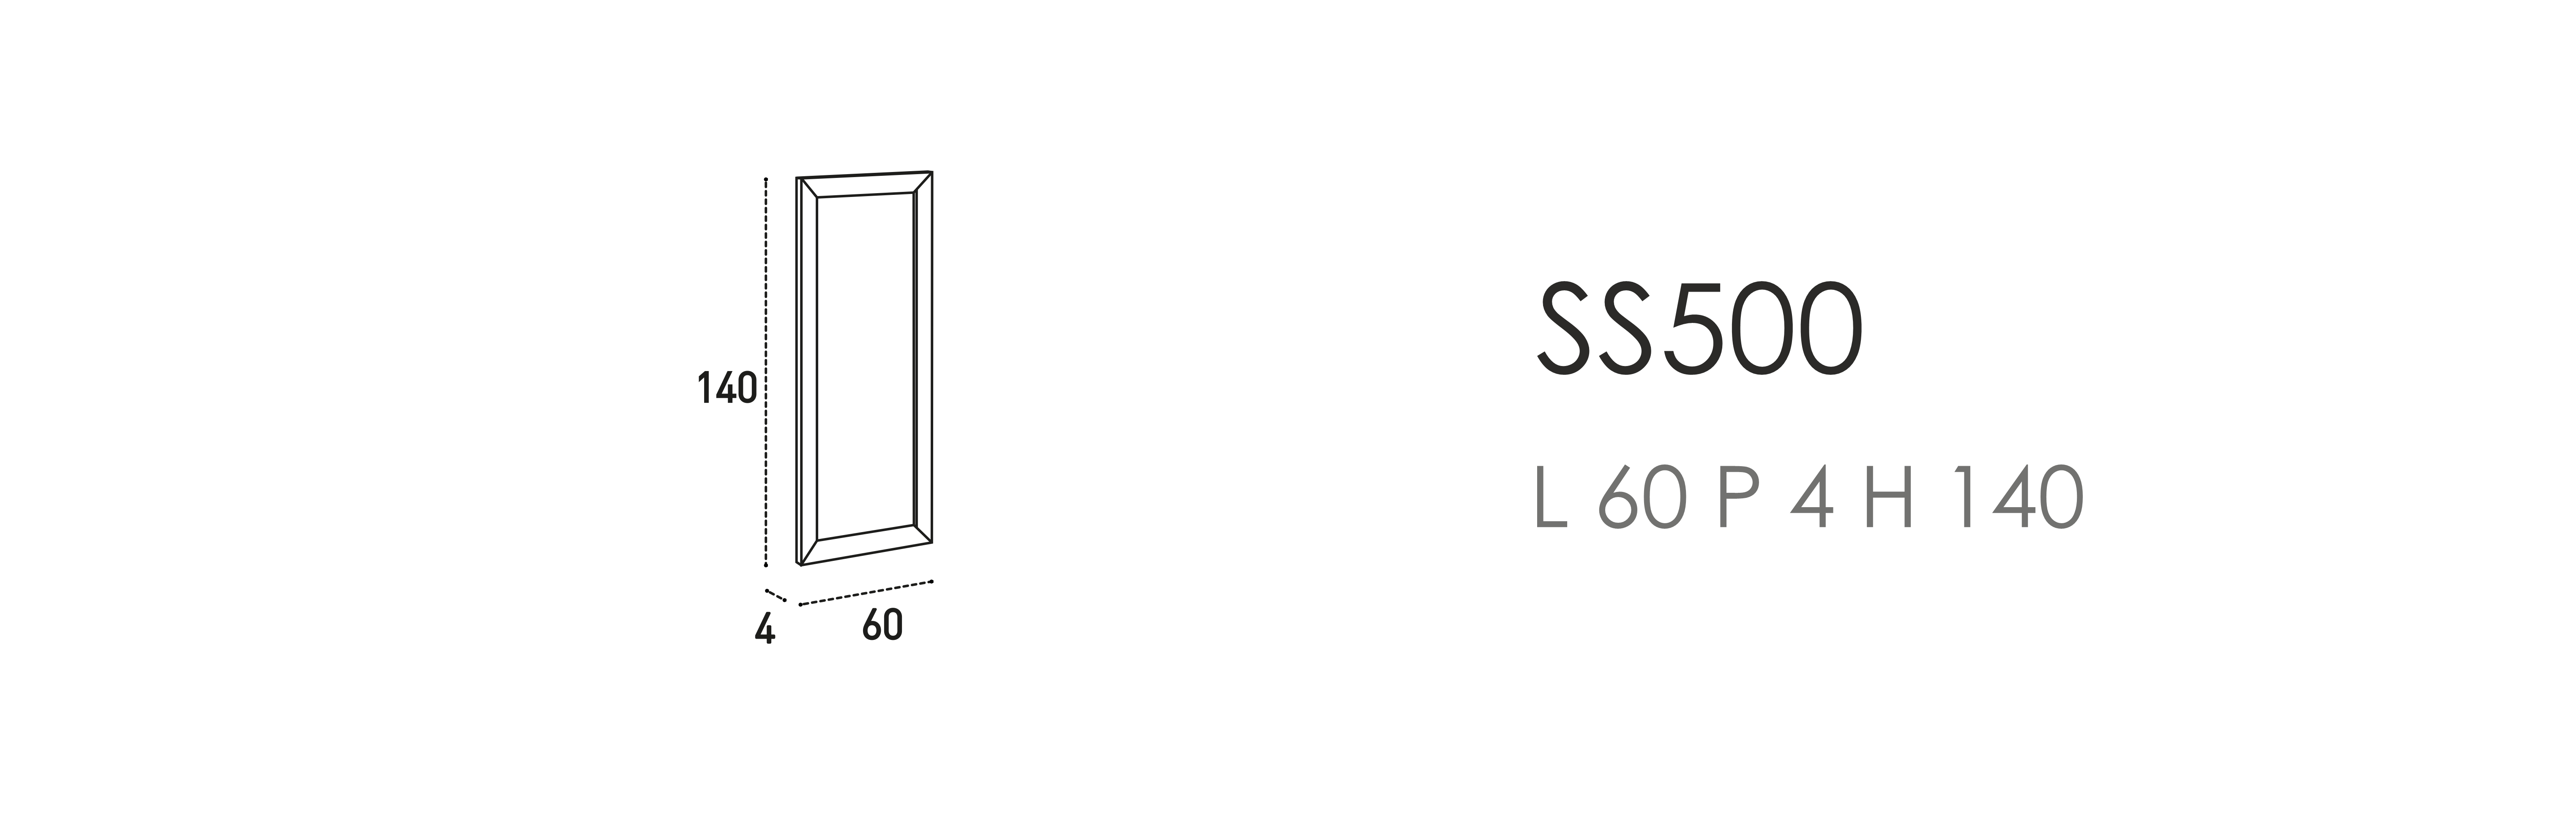 SS500 L 60 P 4 H 140